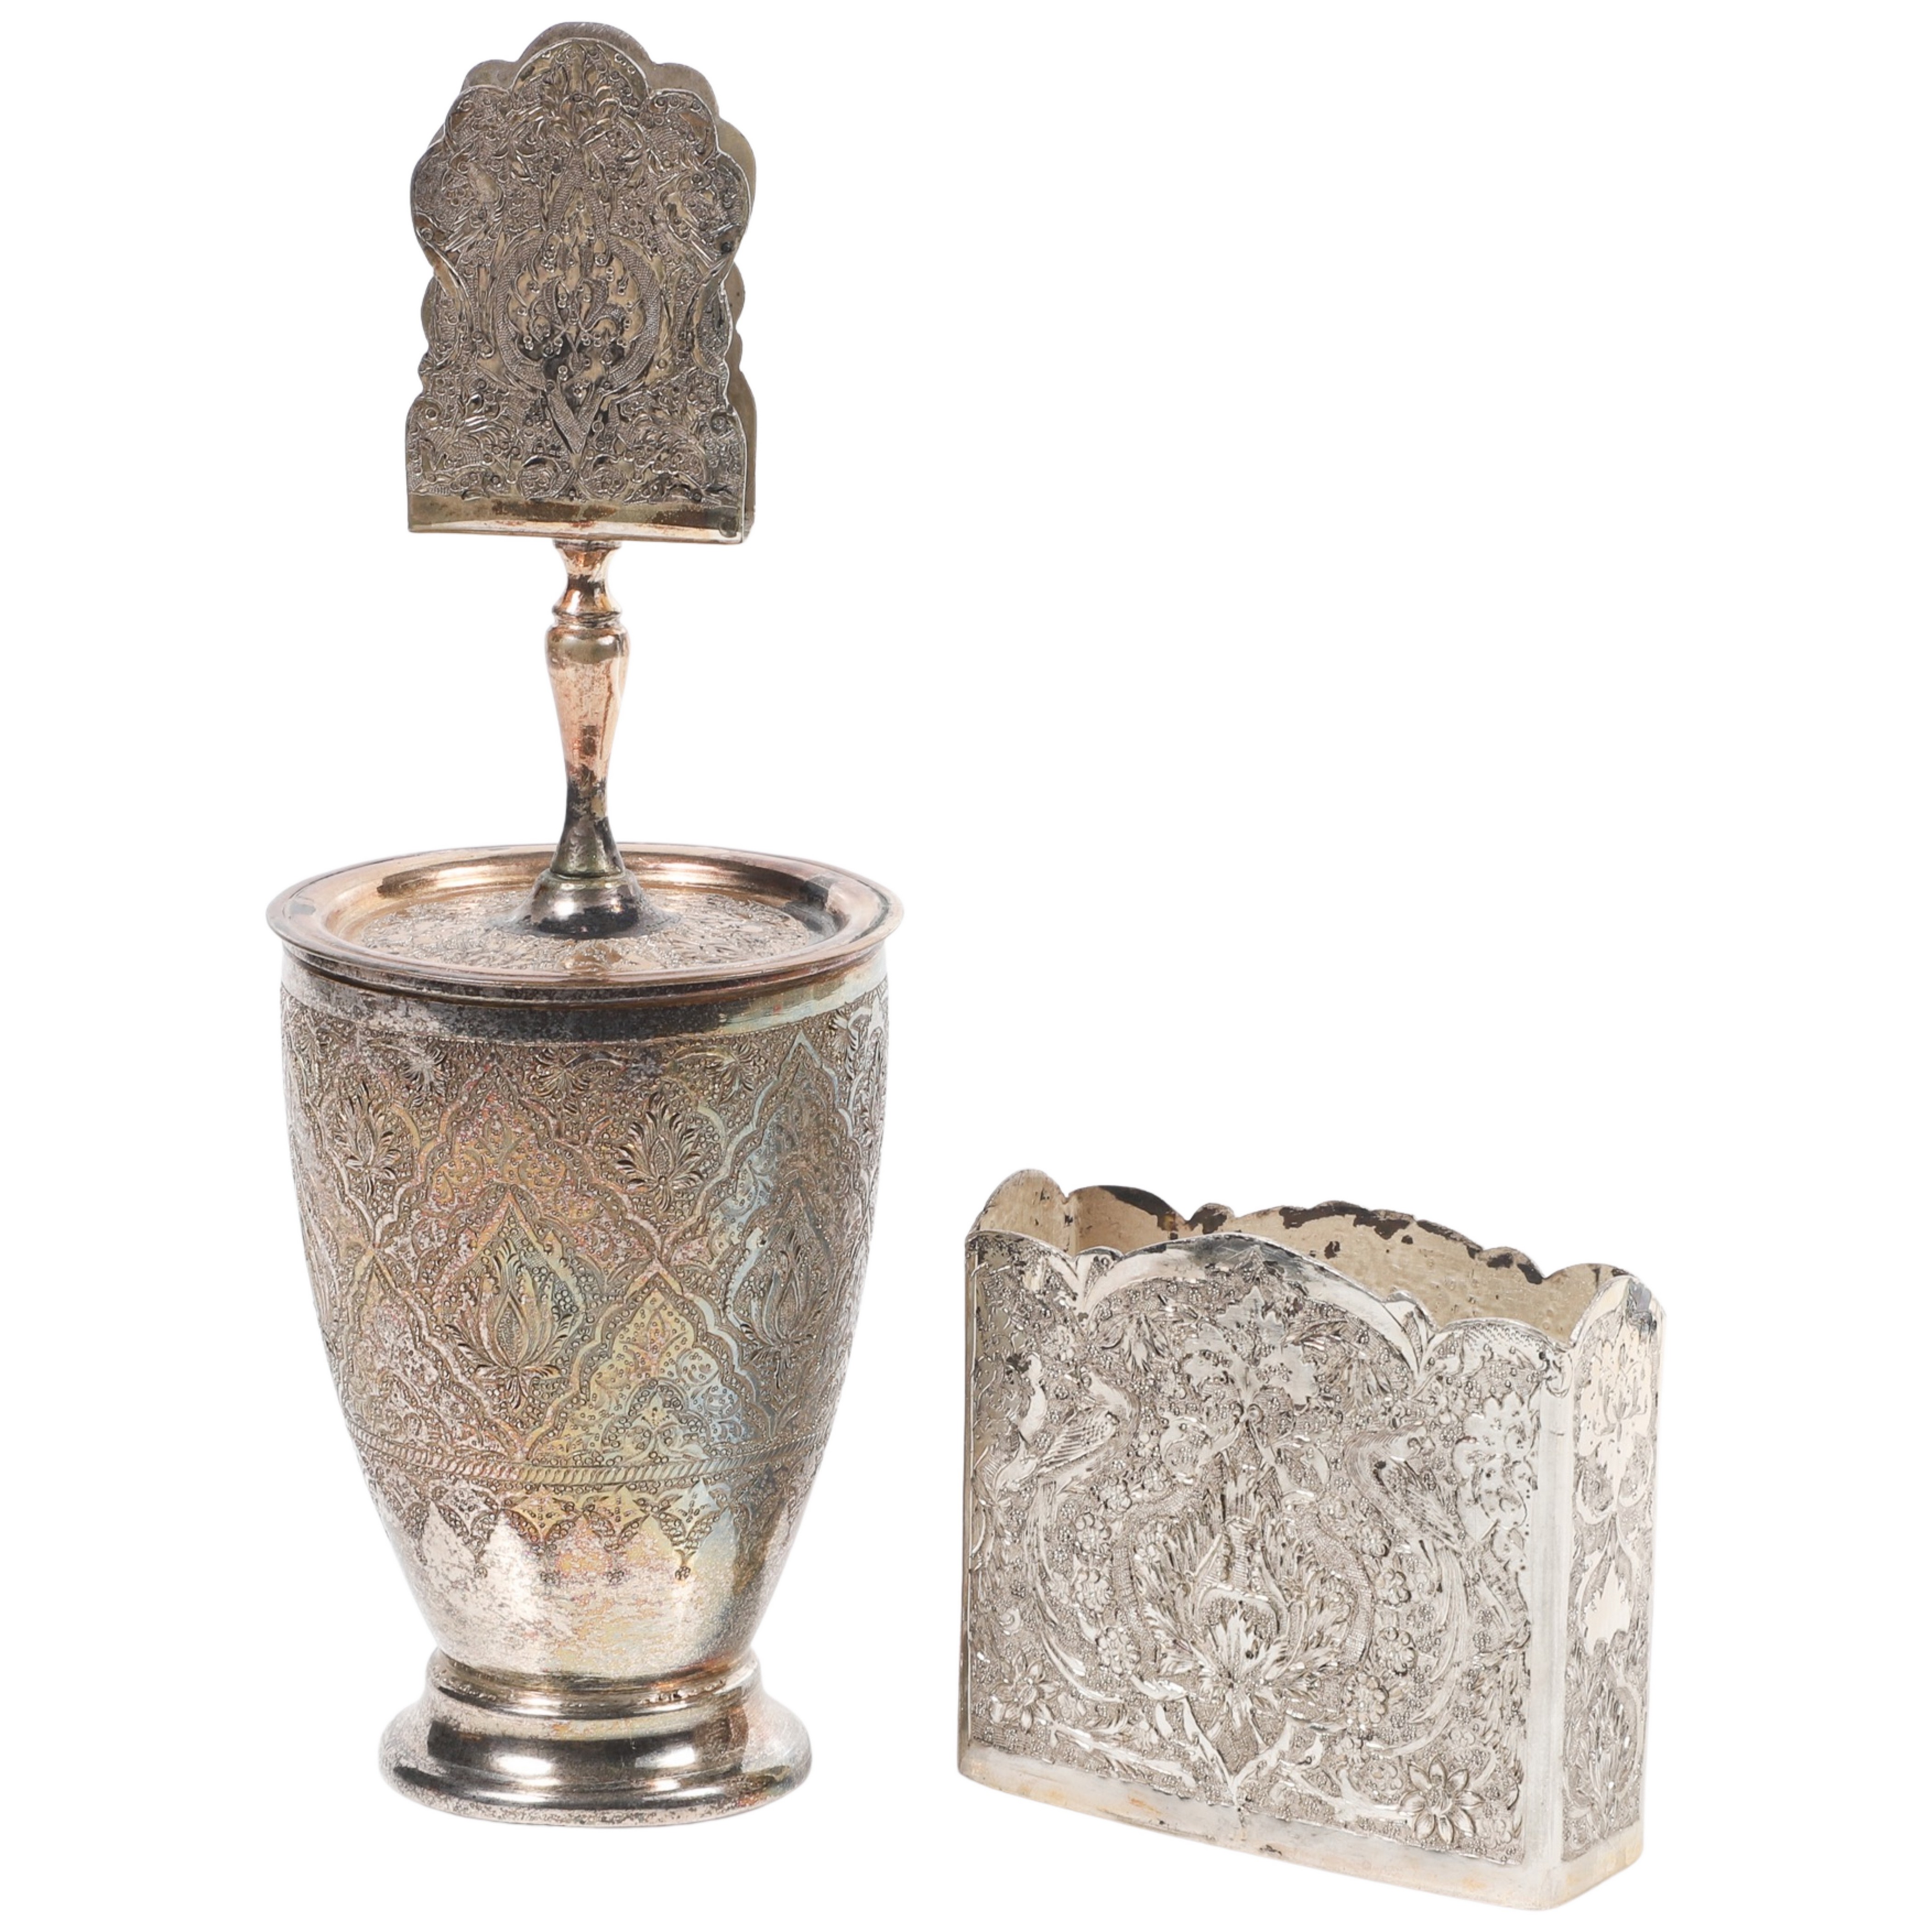 Persian silver smoking accessories